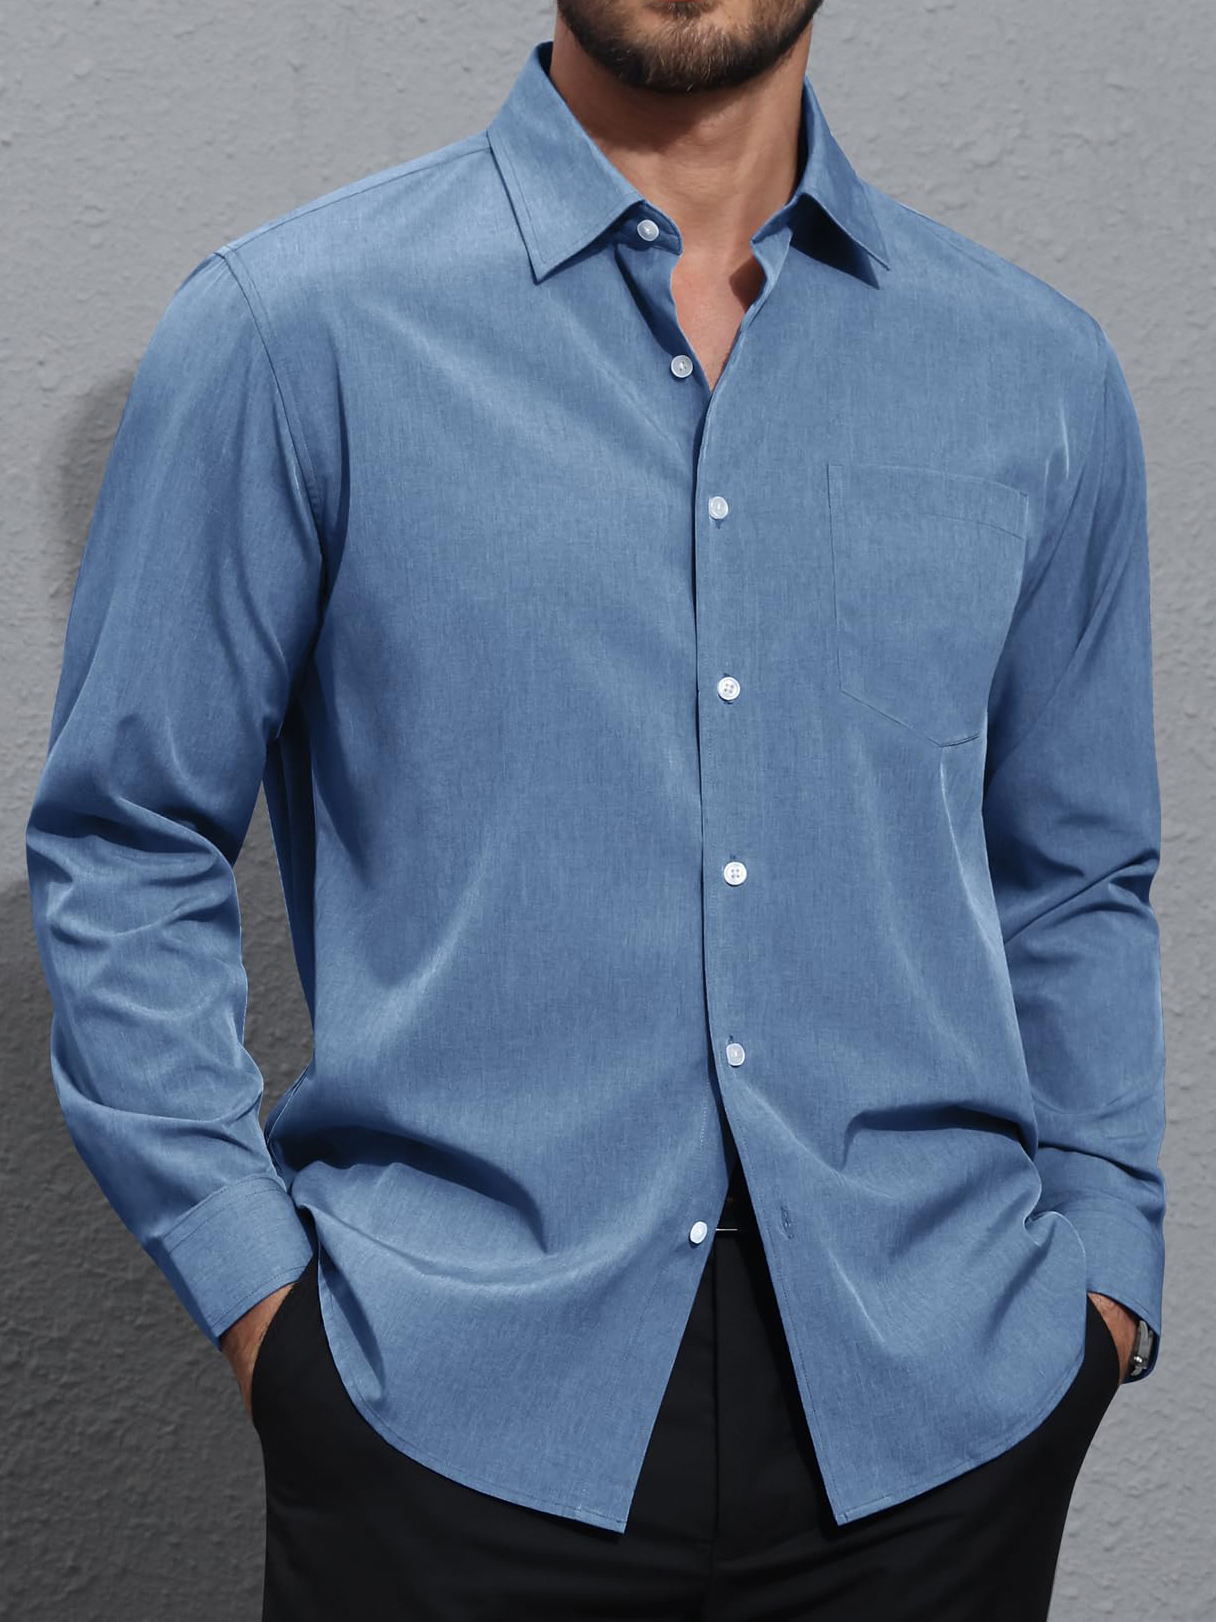 Men's Fashionable Linen Long Sleeve Shirt